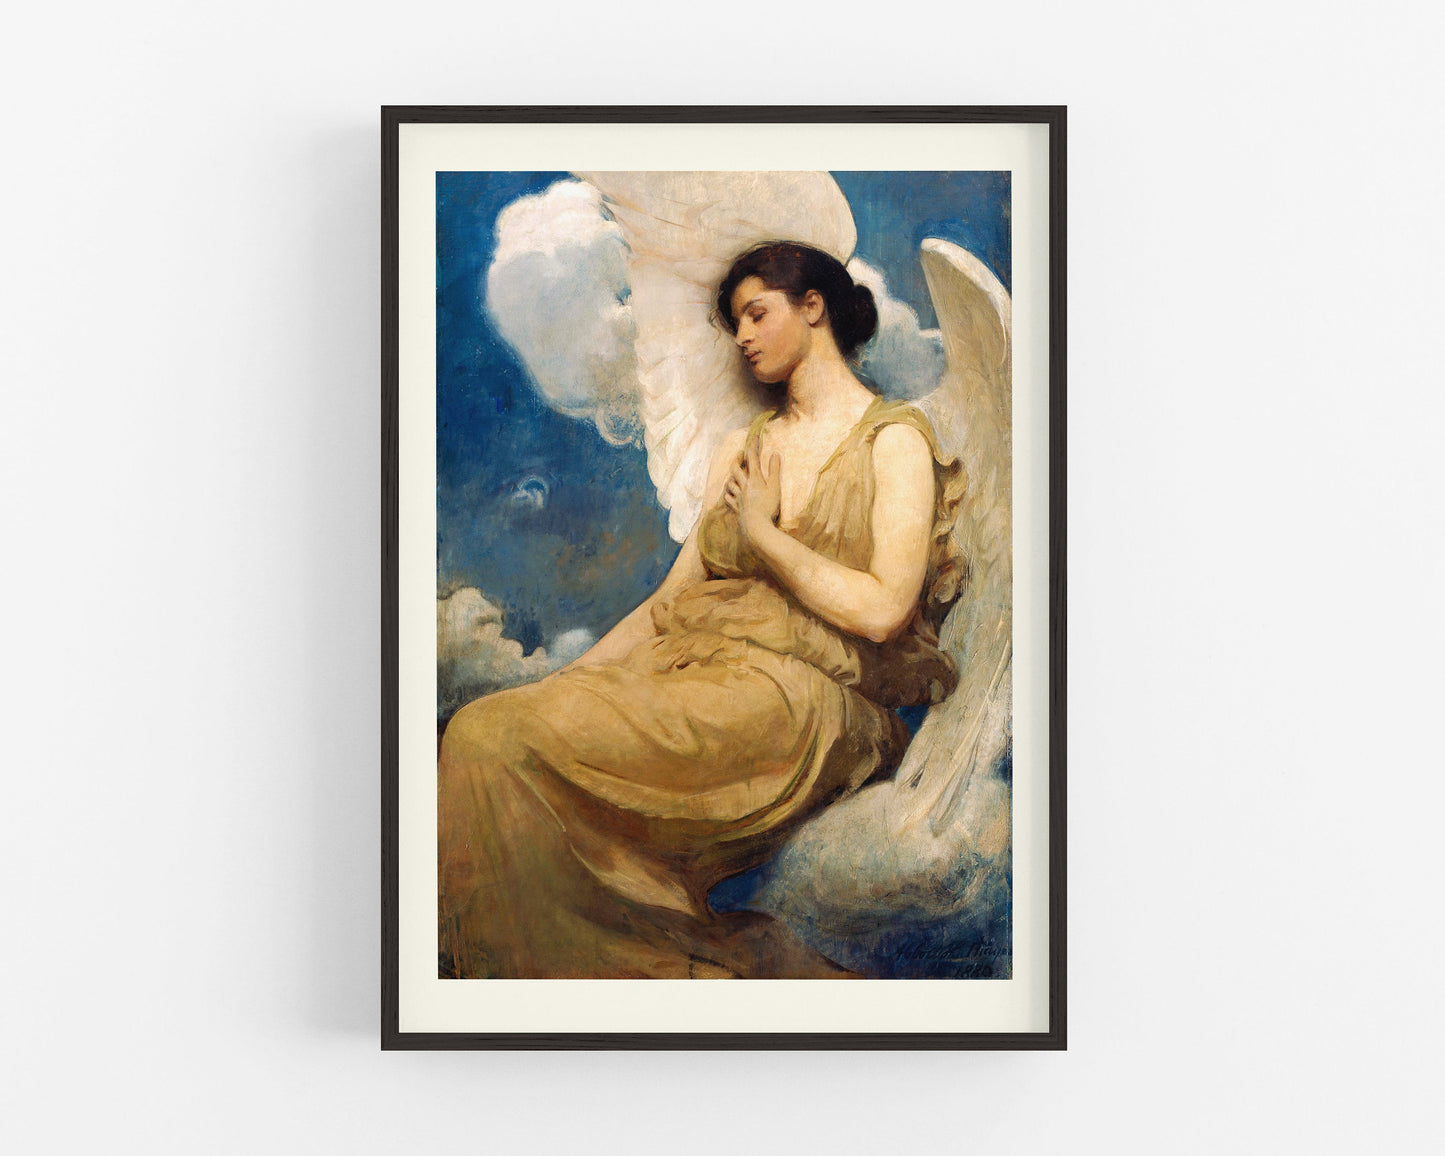 Vintage Angel | Winged figure in clouds |  | Art deco art | Abbot Handerson Thayer | Giclée fine art print | Eco-friendly gift